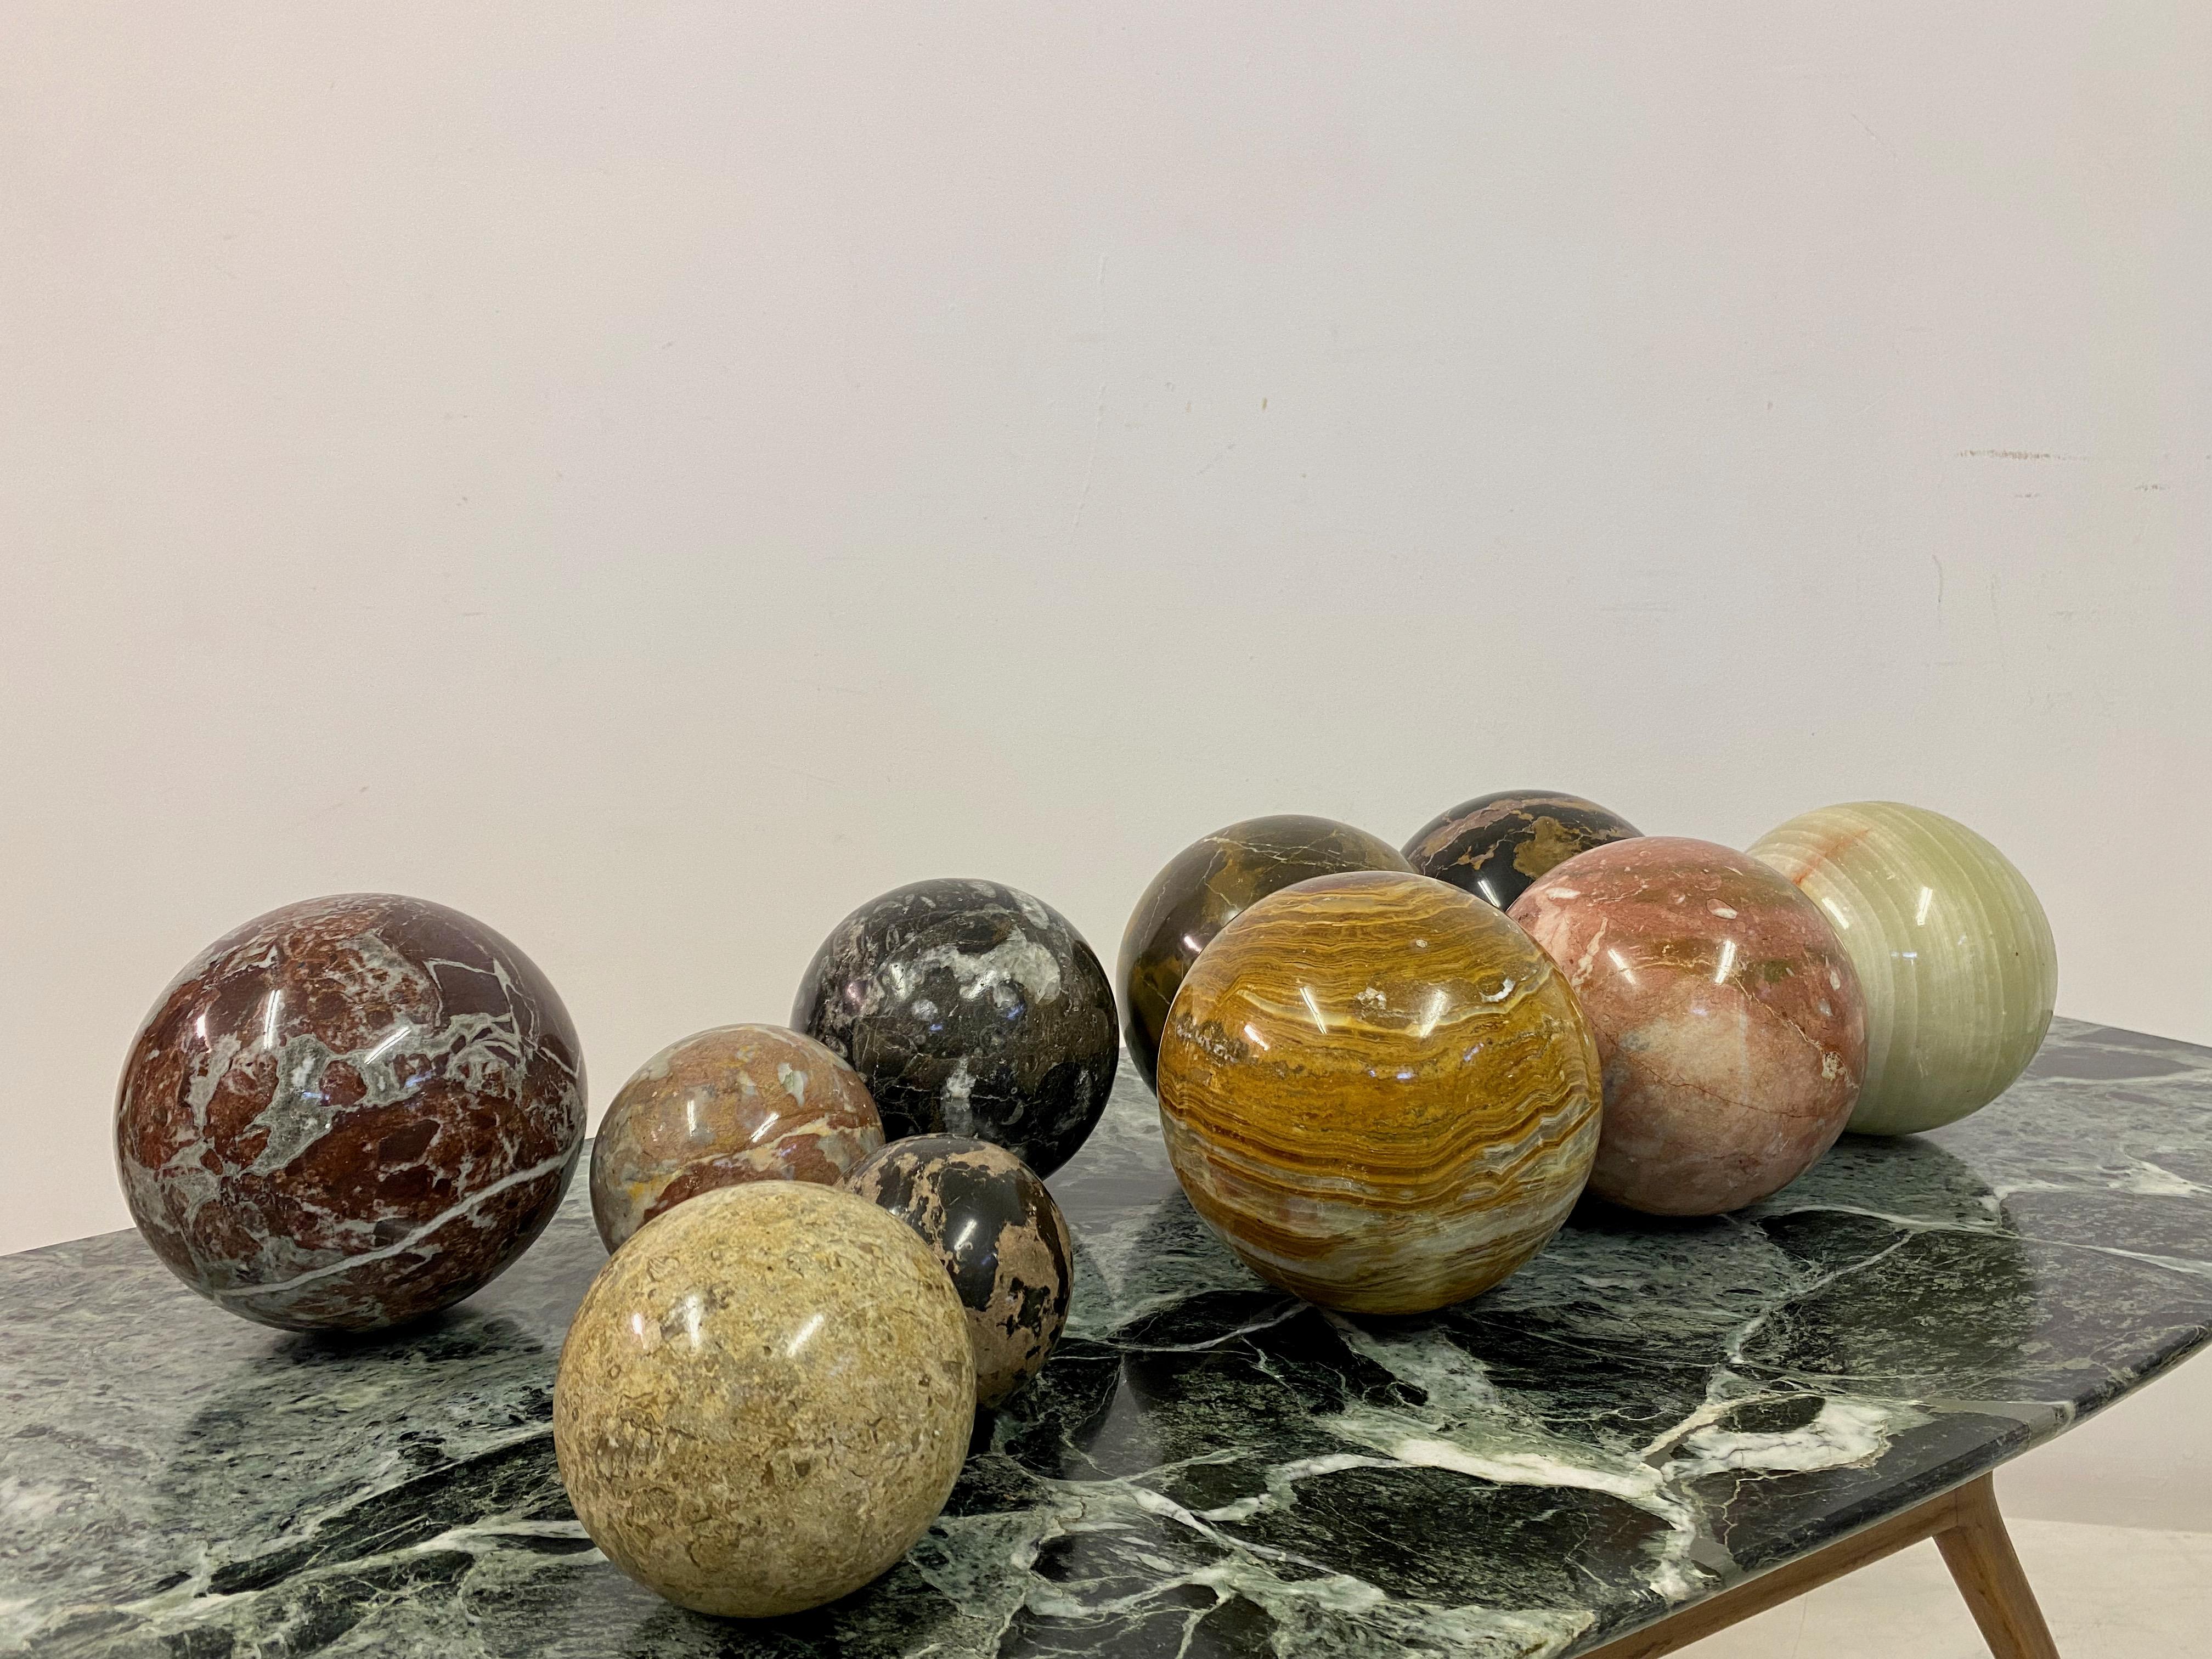 Specimen marble spheres

Different stones

Sizes are 15cm, 13cm, 10cm and 8cm diameter

Age unknown
